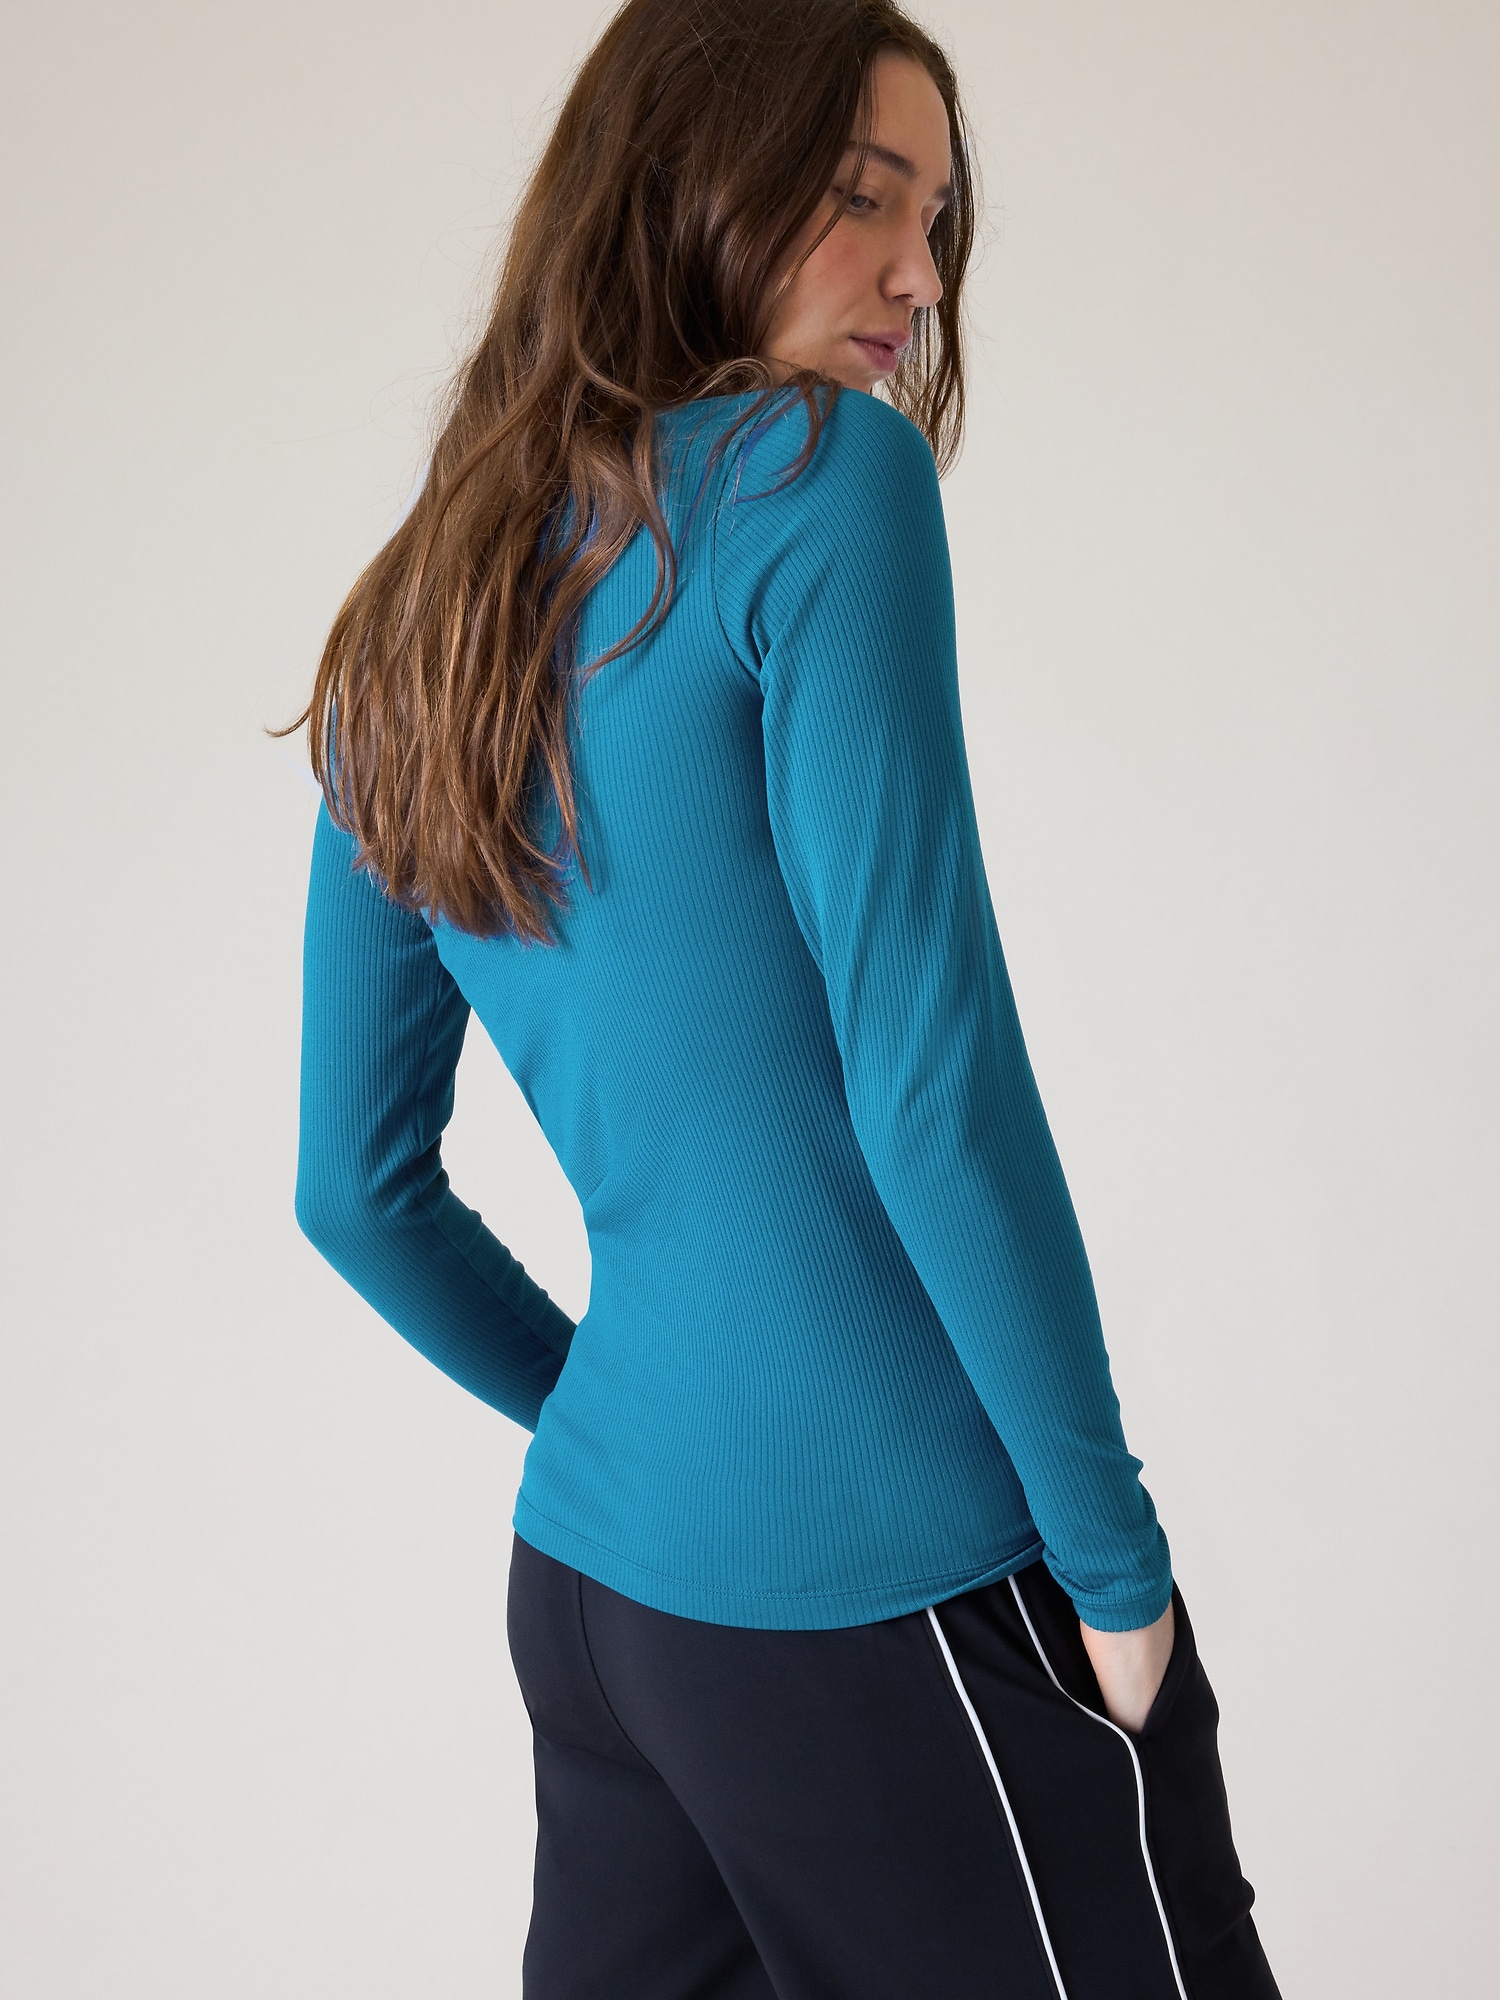 VIVI Seamless Long Sleeve Blue Top - TIYE the coolest sportswear